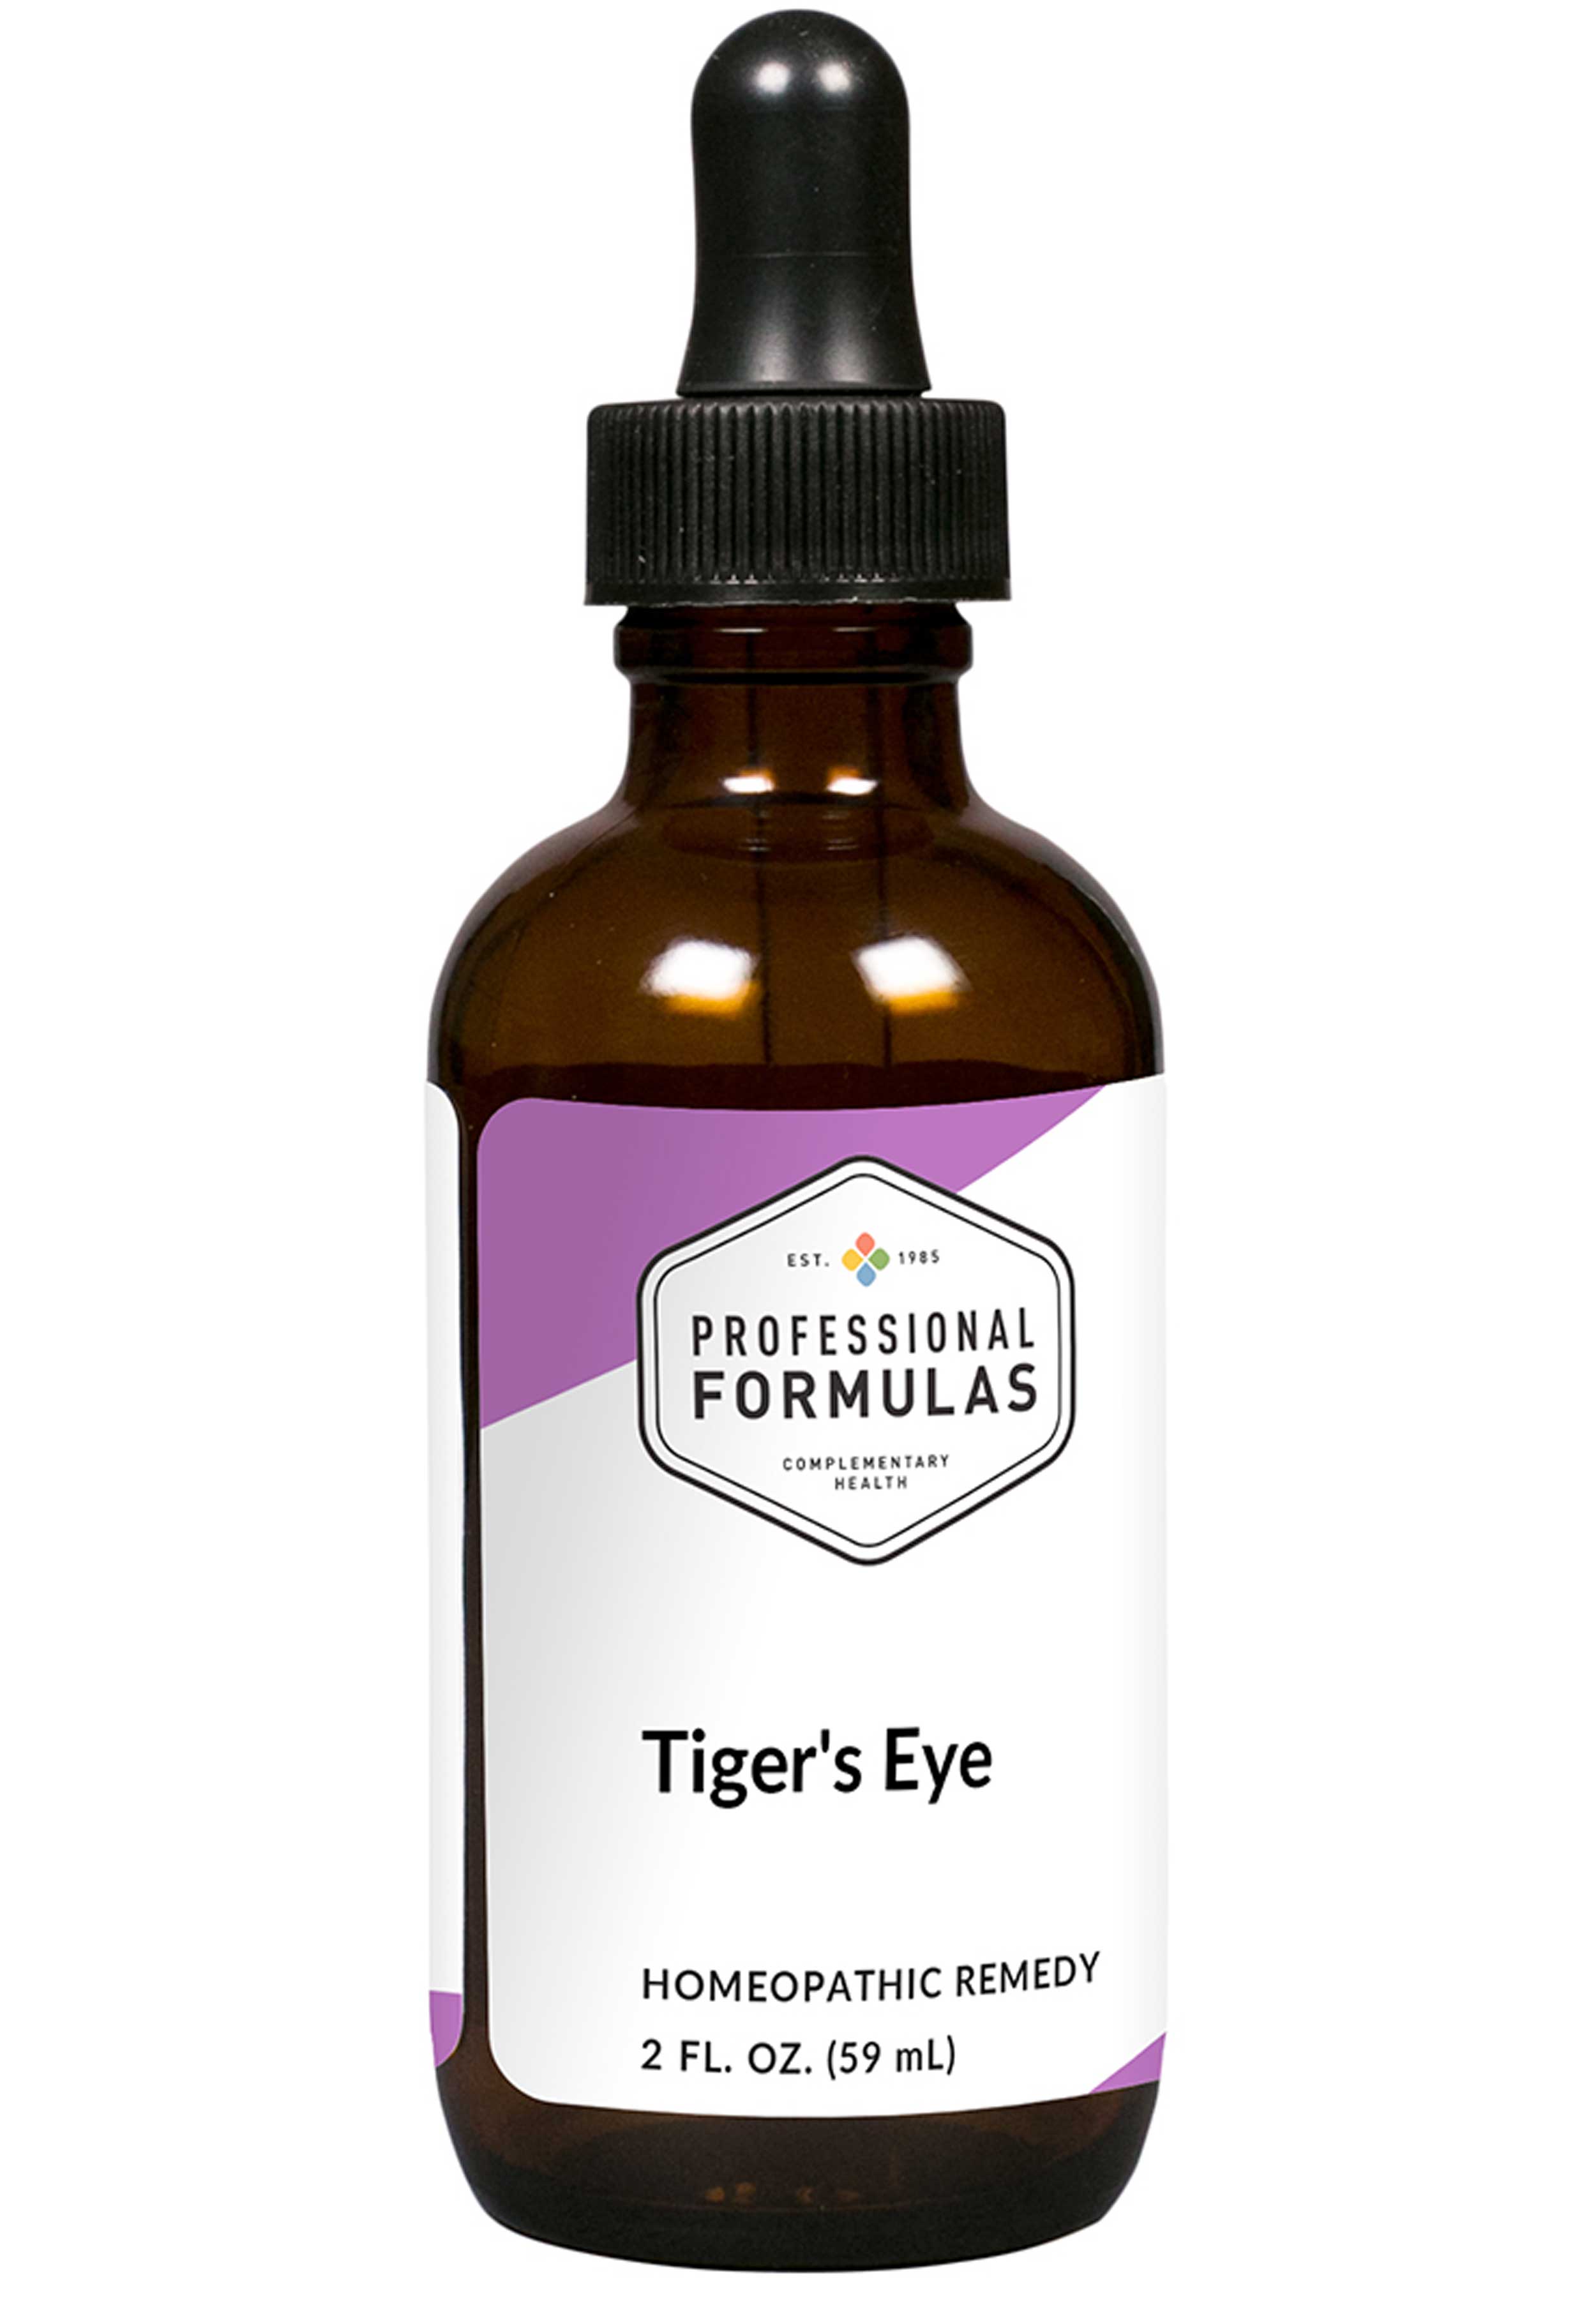 Professional Formulas Tiger's Eye